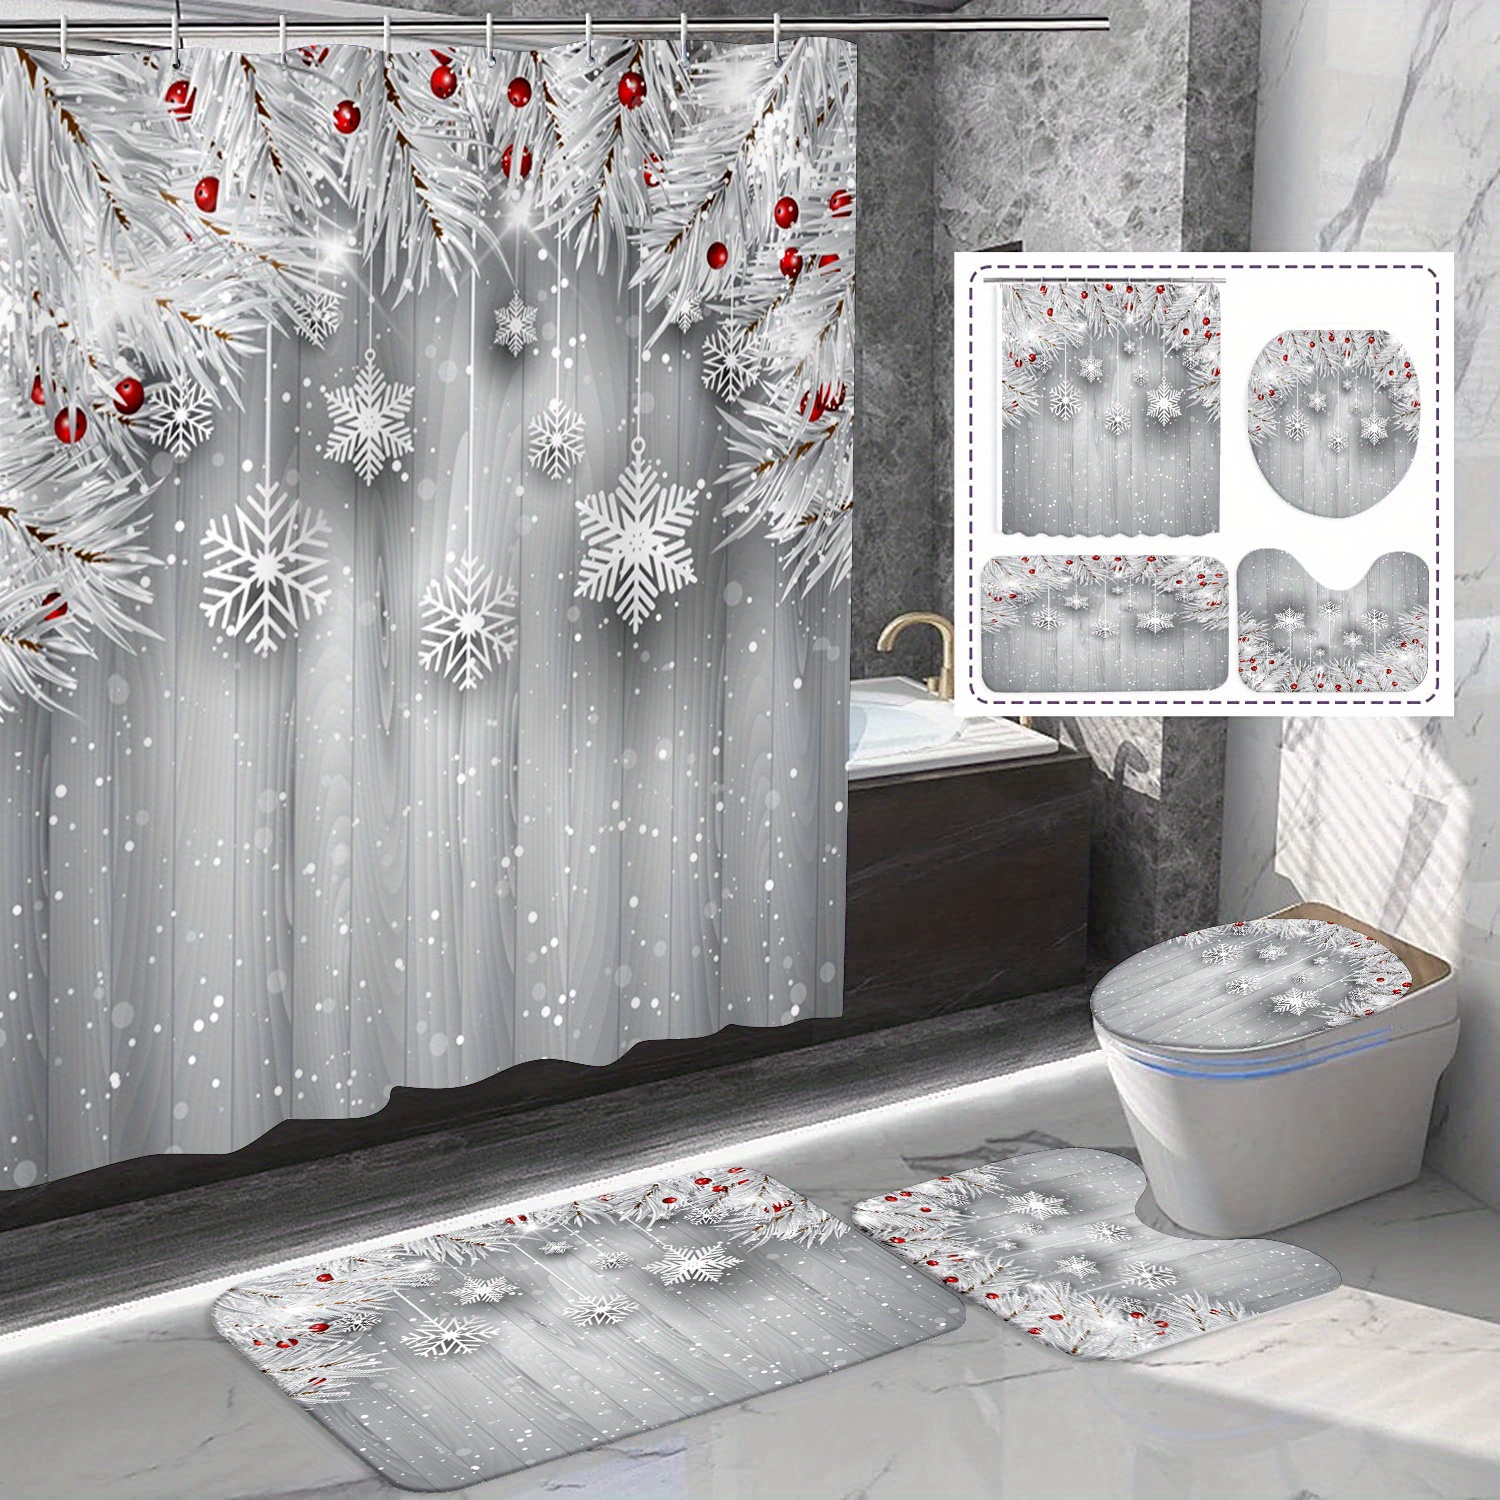 Christmas Bathroom Sets Decorations, Christmas Bathroom Sets Decor Merry Christmas Theme Shower Curtain and Bath Mat Set with Non-Slip Rug Toilet Lid